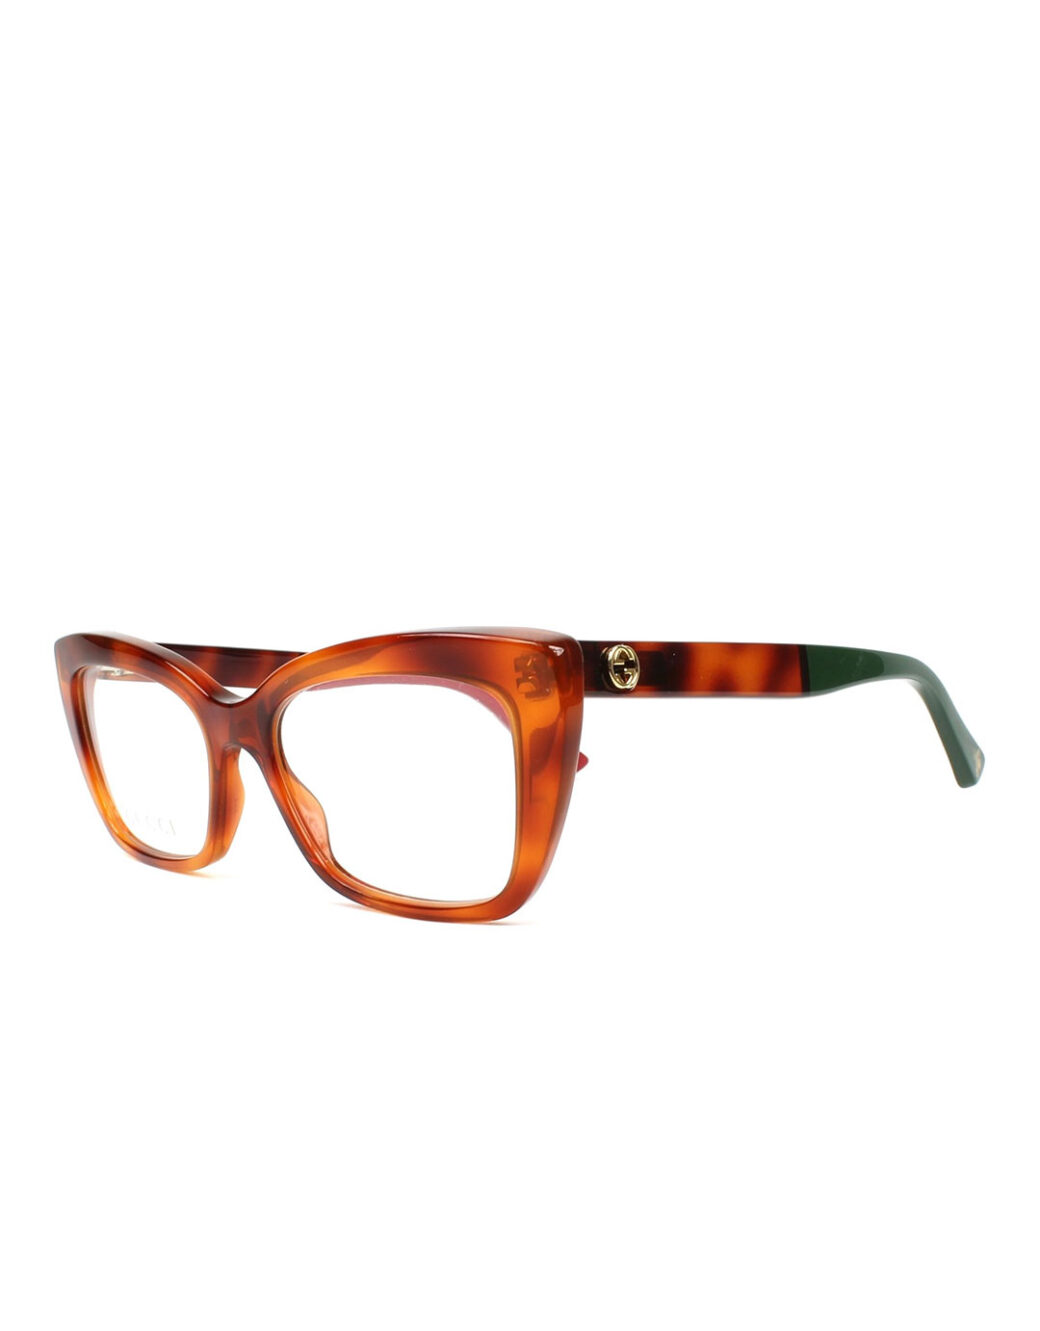 Gucci Eyewear - Shop Women Eyeglasses from UAE Optics - uaeoptics.com